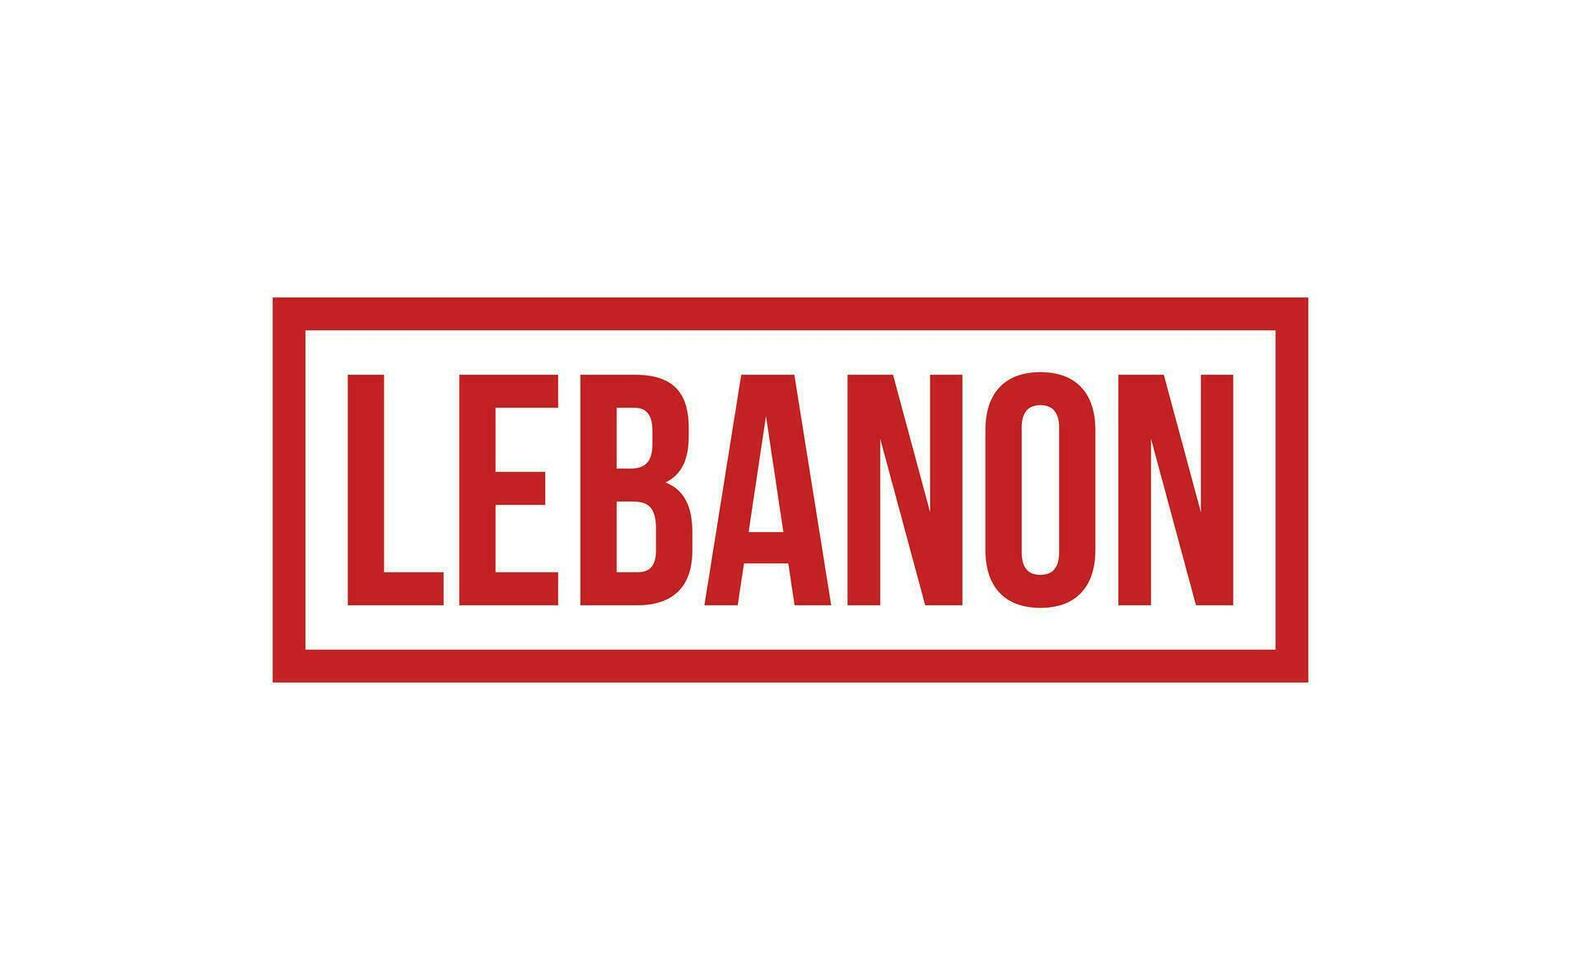 libanon sudd stämpel täta vektor